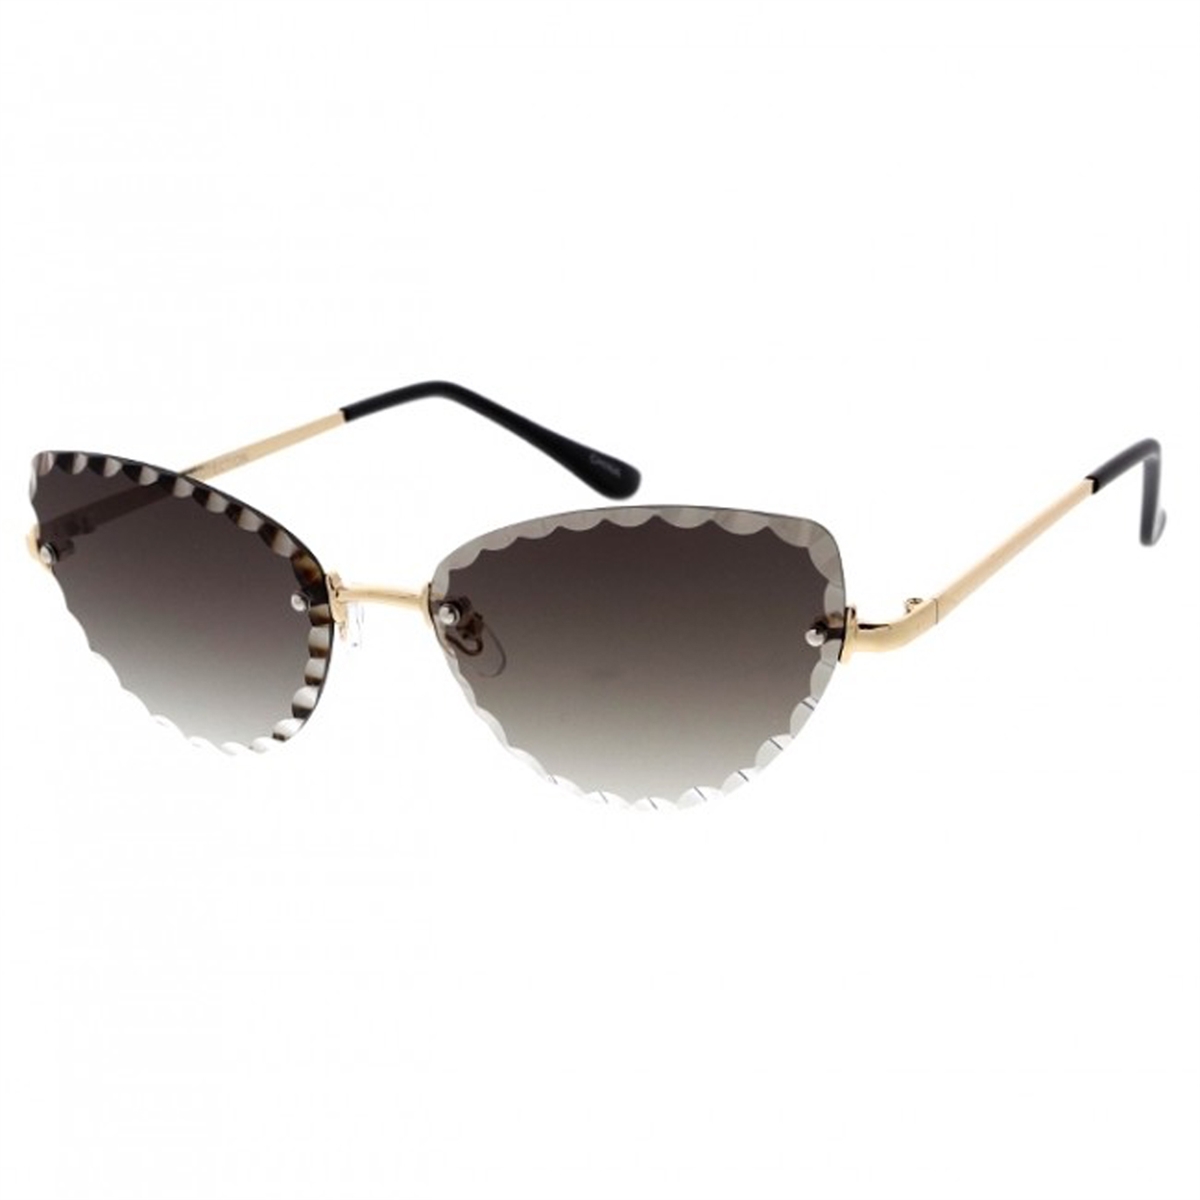 Fashion Culture Scallop Beveled Edge Ombre Lens Cat Eye Sunglasses, Grey